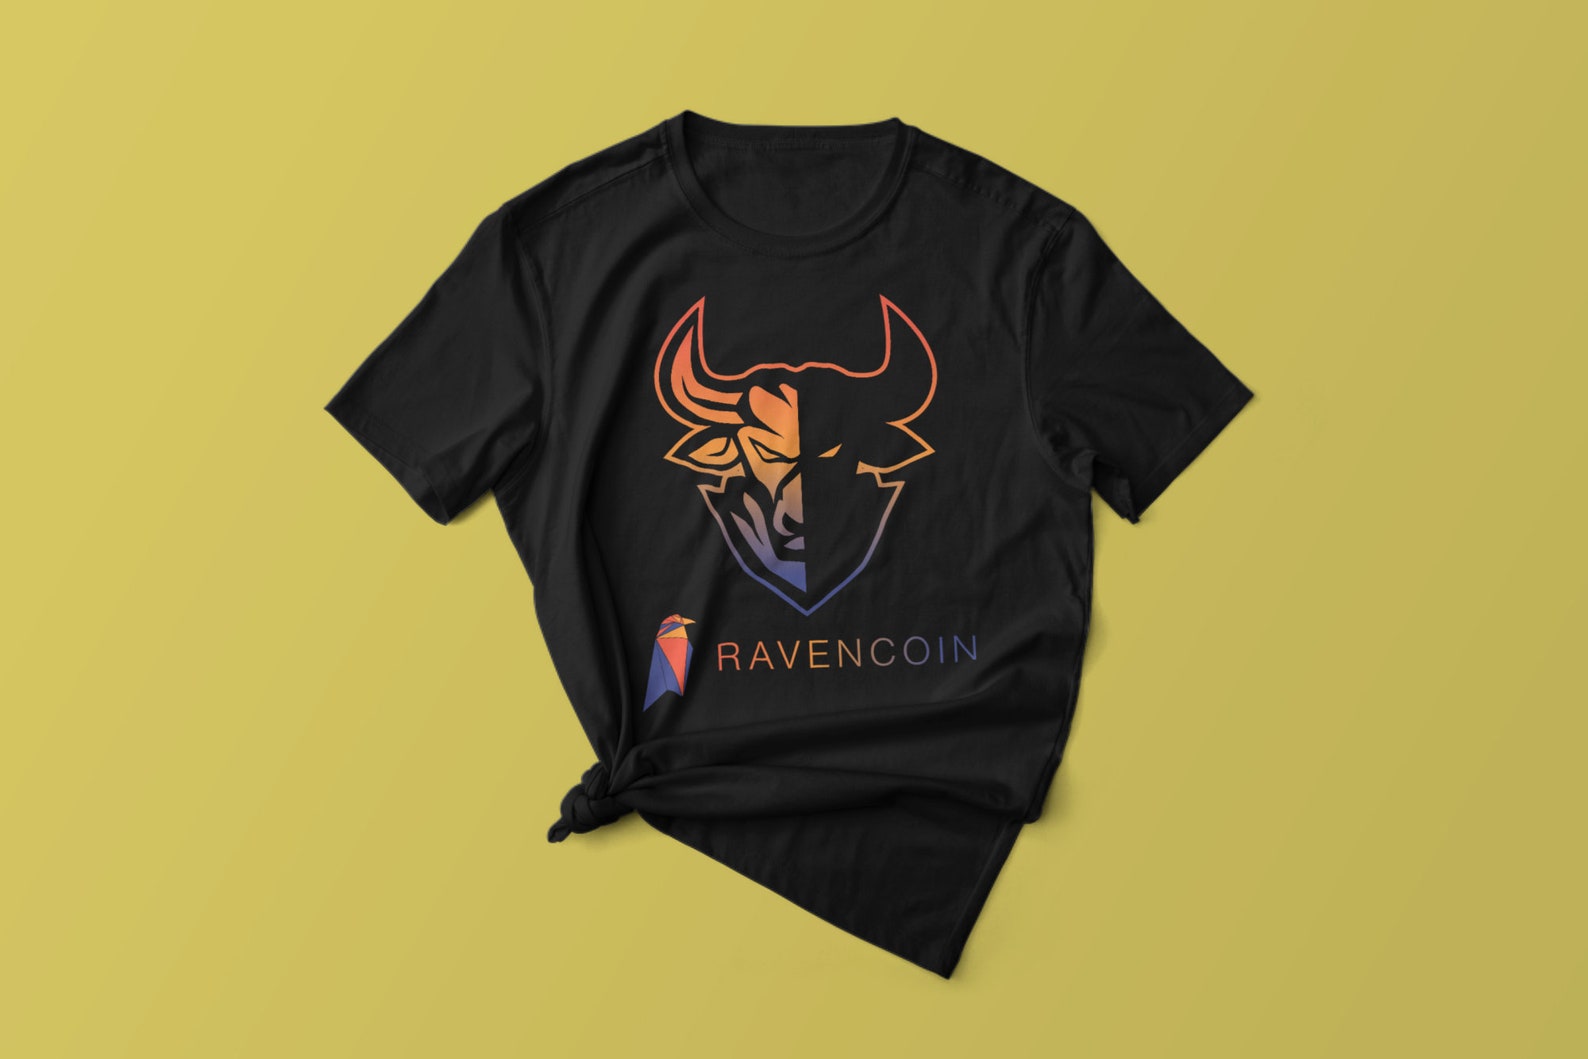 Ravencoin Crypto RVN coin Crytopcurrency Short-Sleeve ...